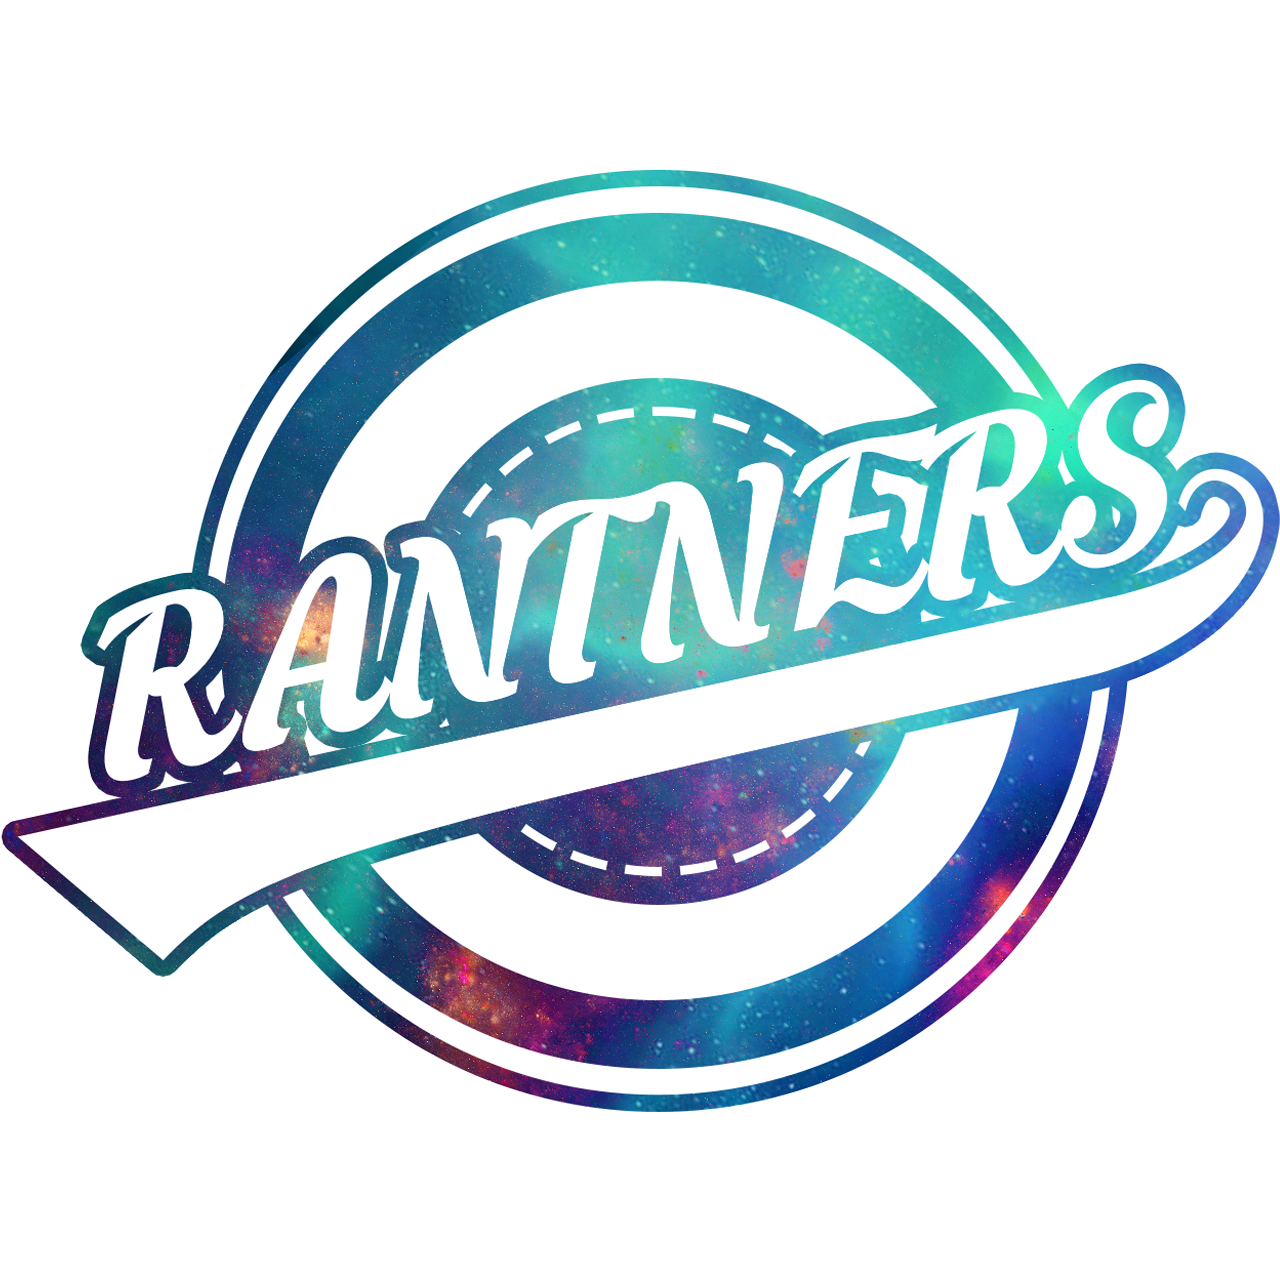 The Rantners Logo